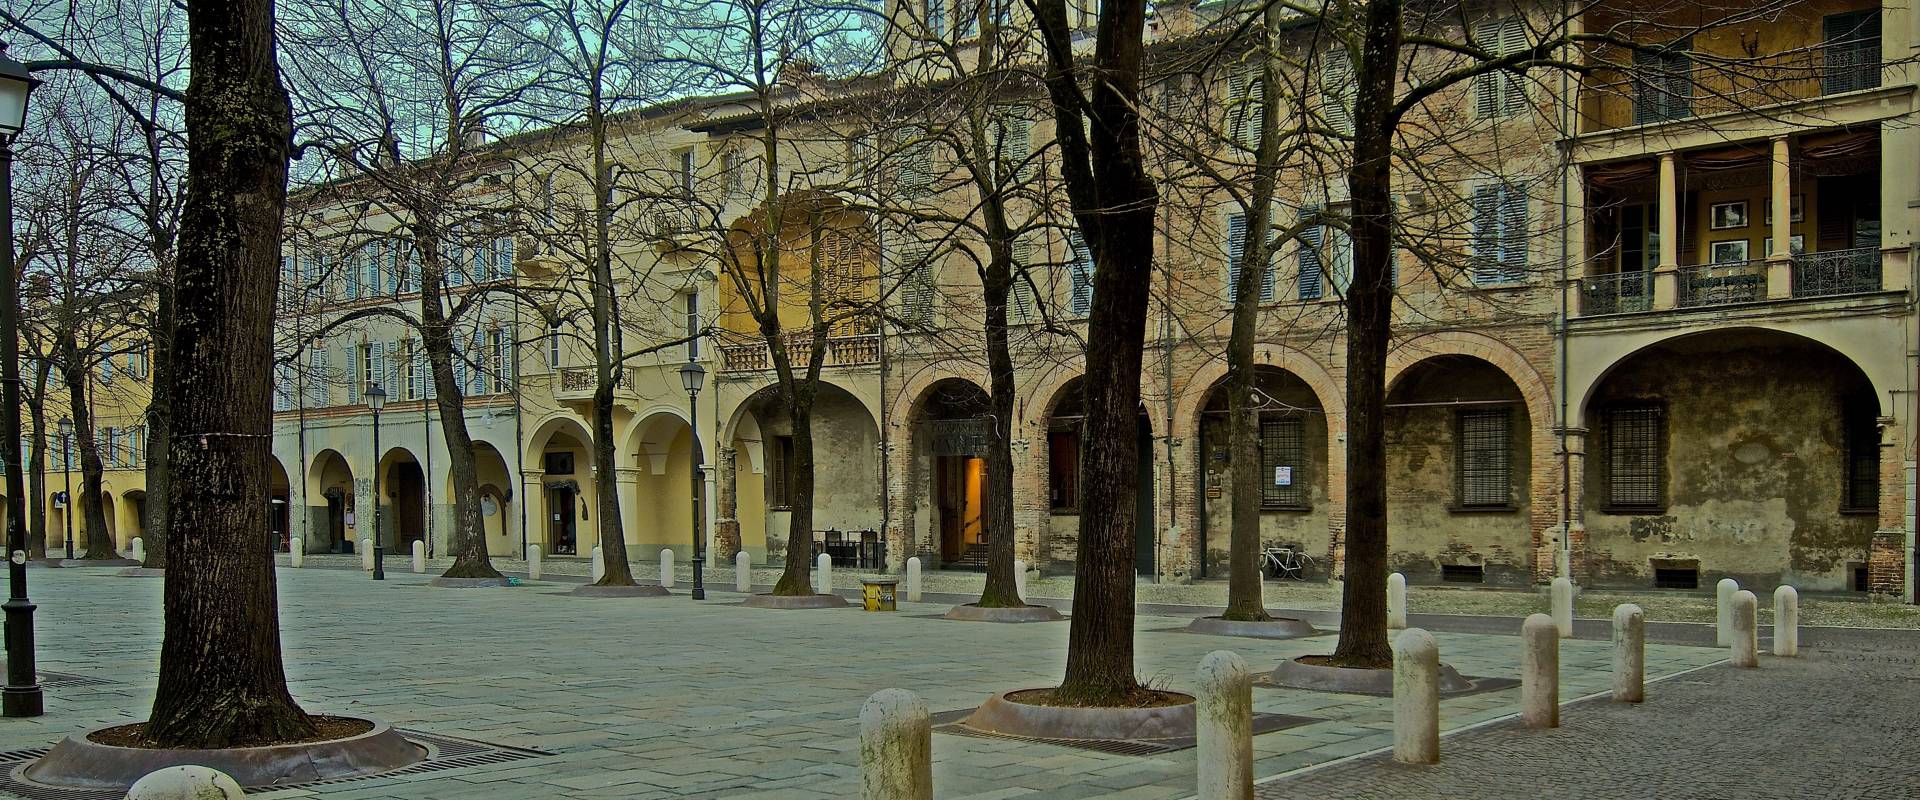 Piazza Fontanesi photo by Caba2011